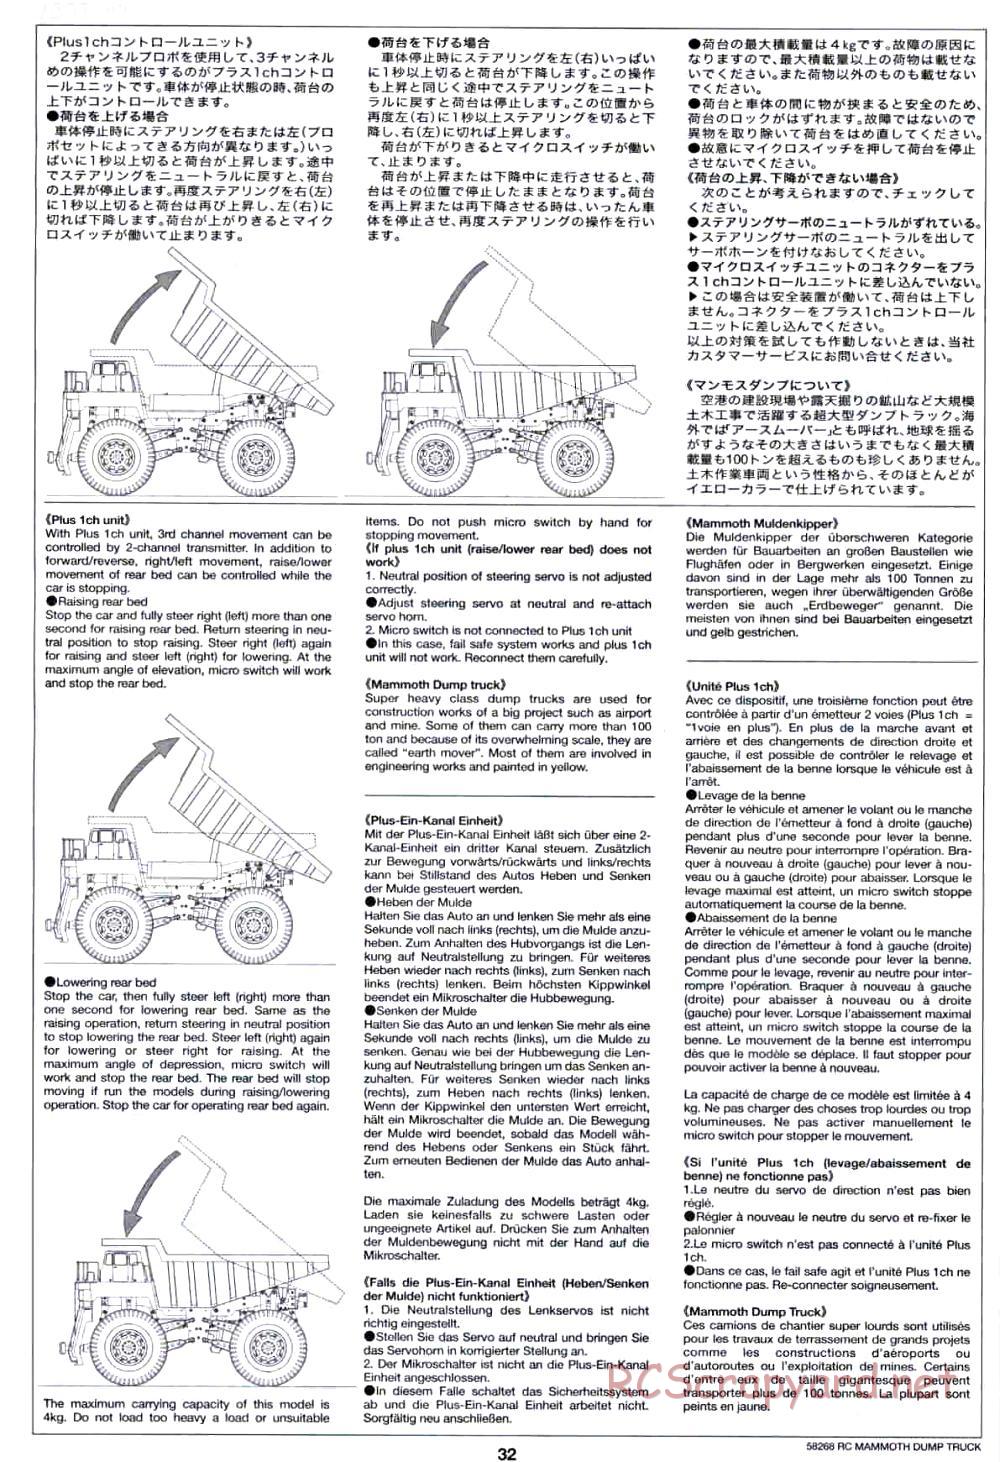 Tamiya - Mammoth Dump Truck Chassis - Manual - Page 32